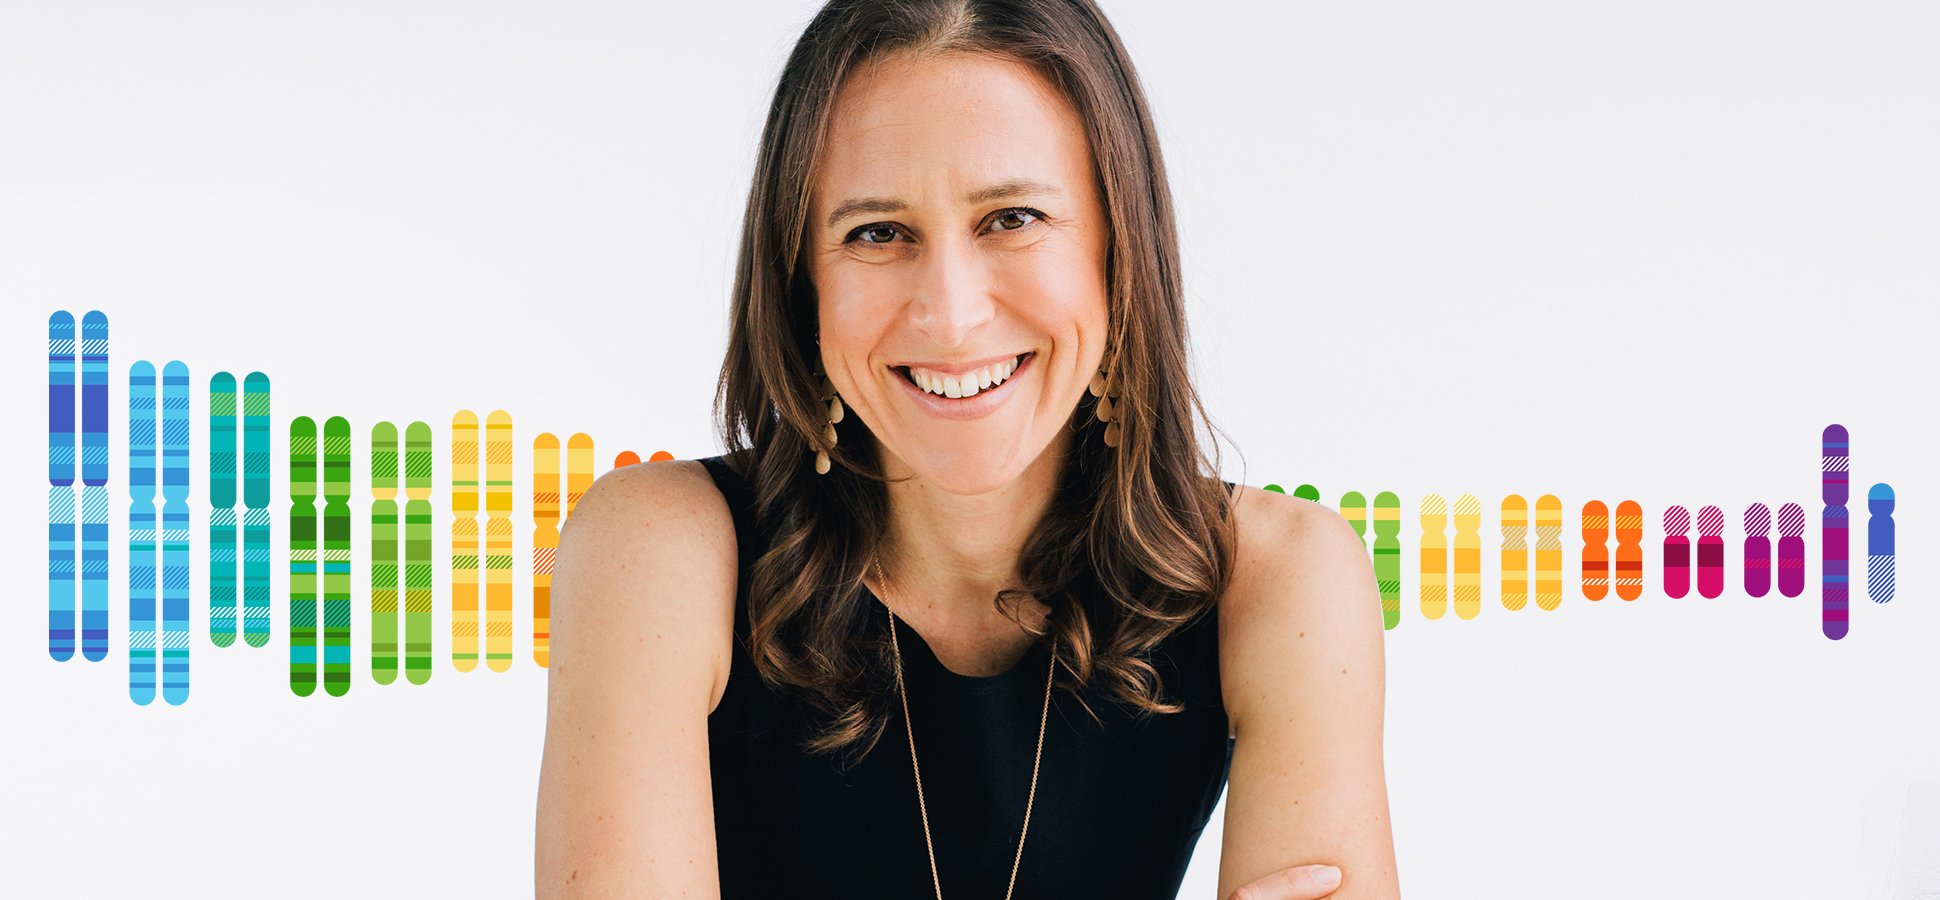 Female entrepreneurs and female founders: Anne Wojcicki of 23andme